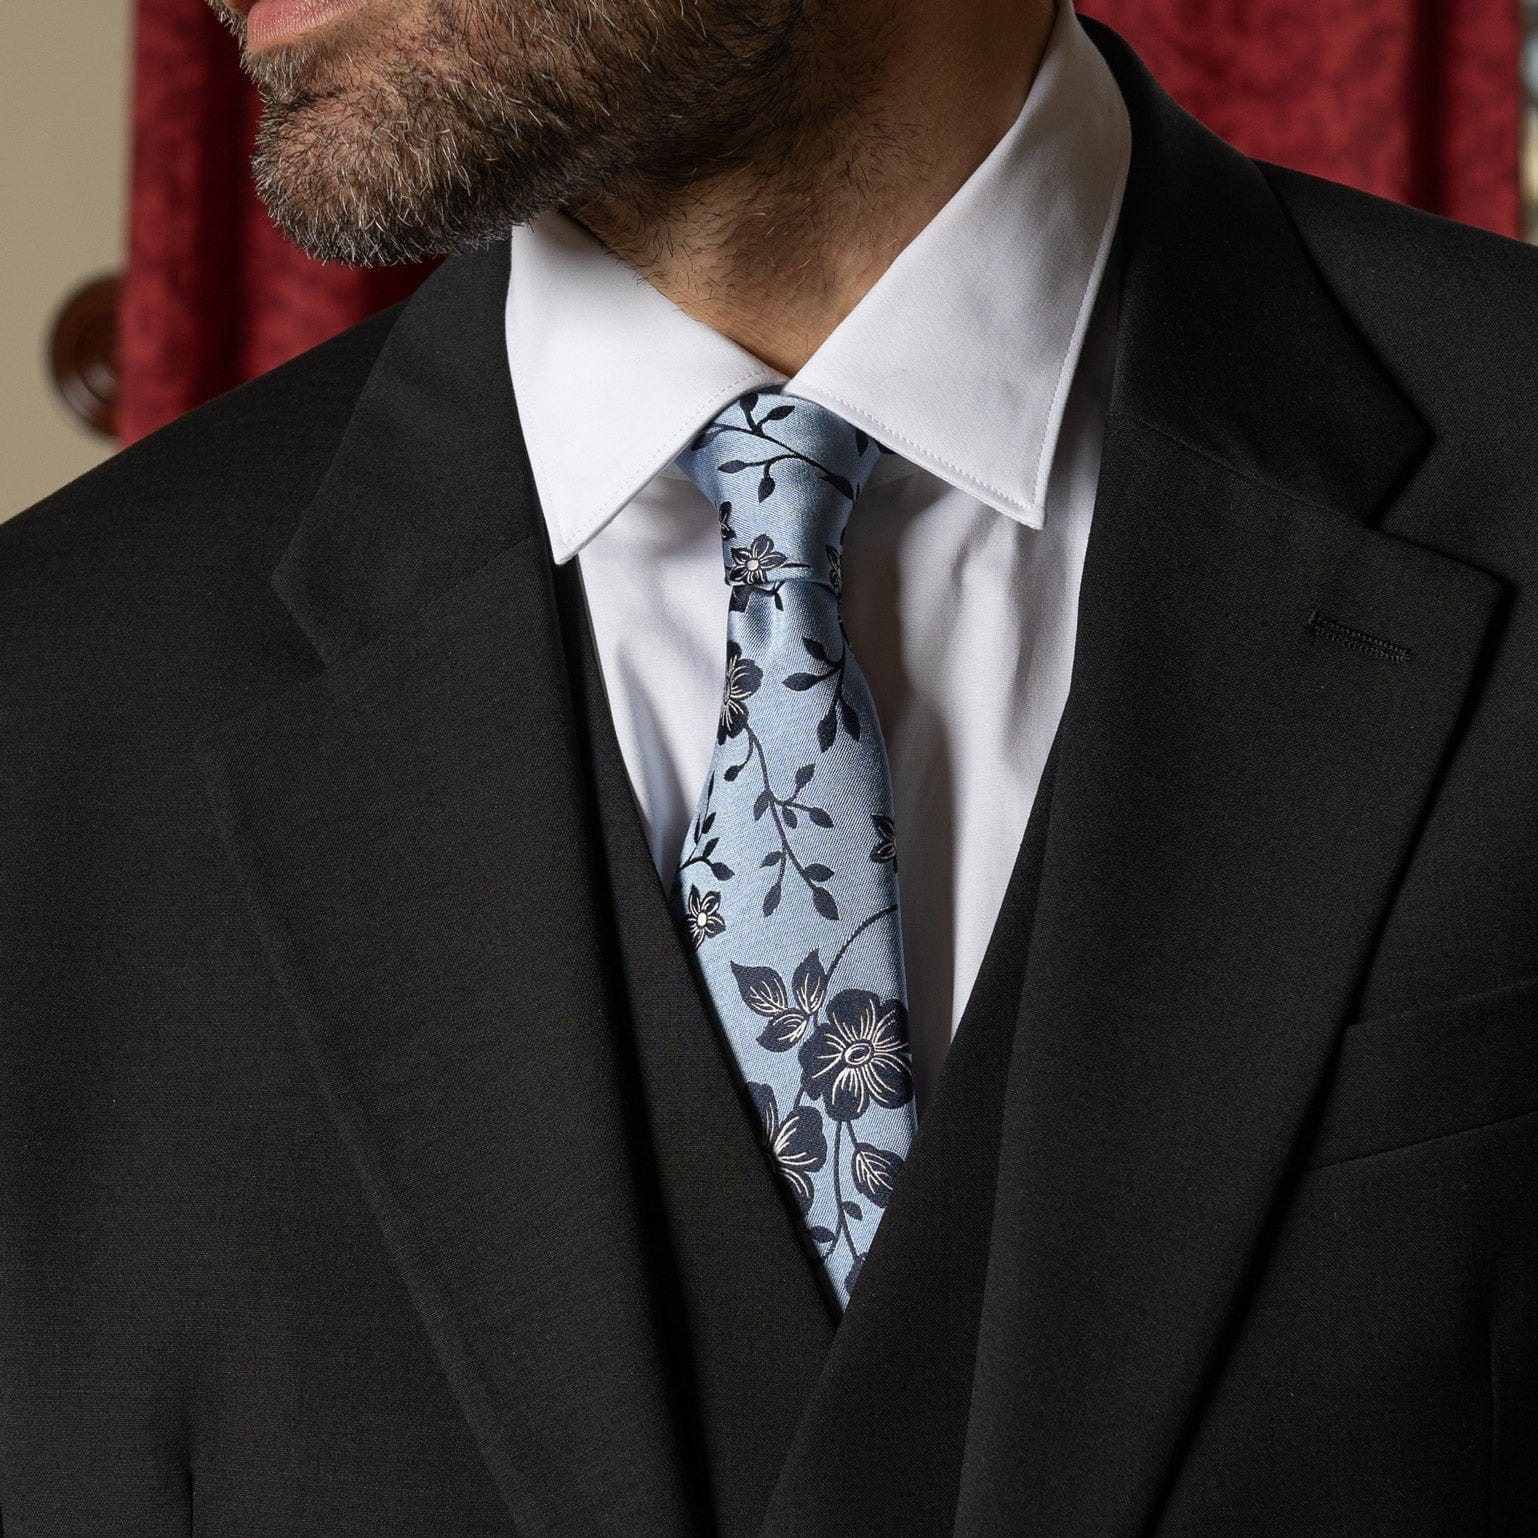 Luxury blue Italian silk tie for formal occasions